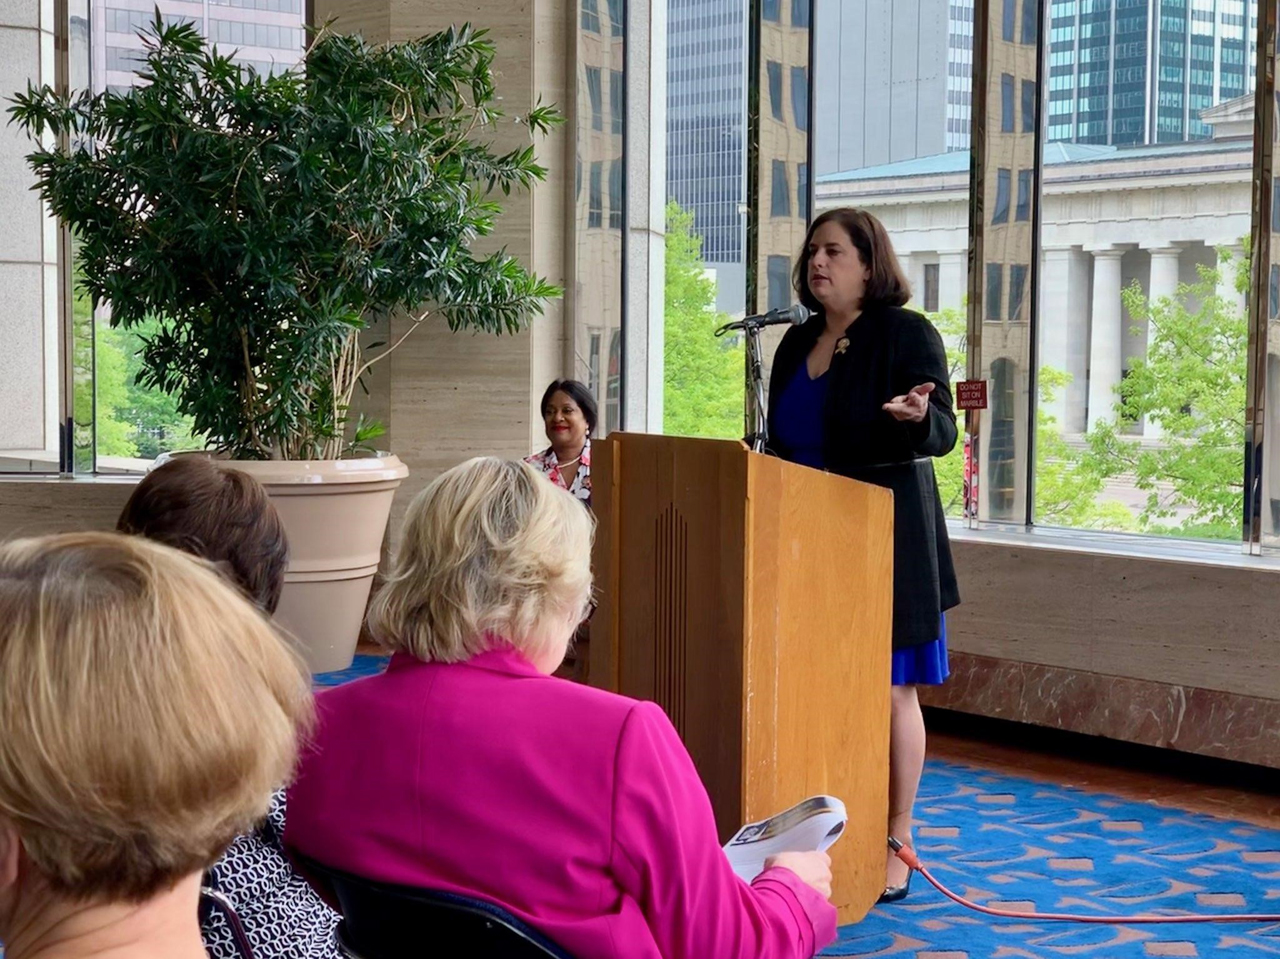 Rep. Liston speaks at 2019 Women's Lobby Day